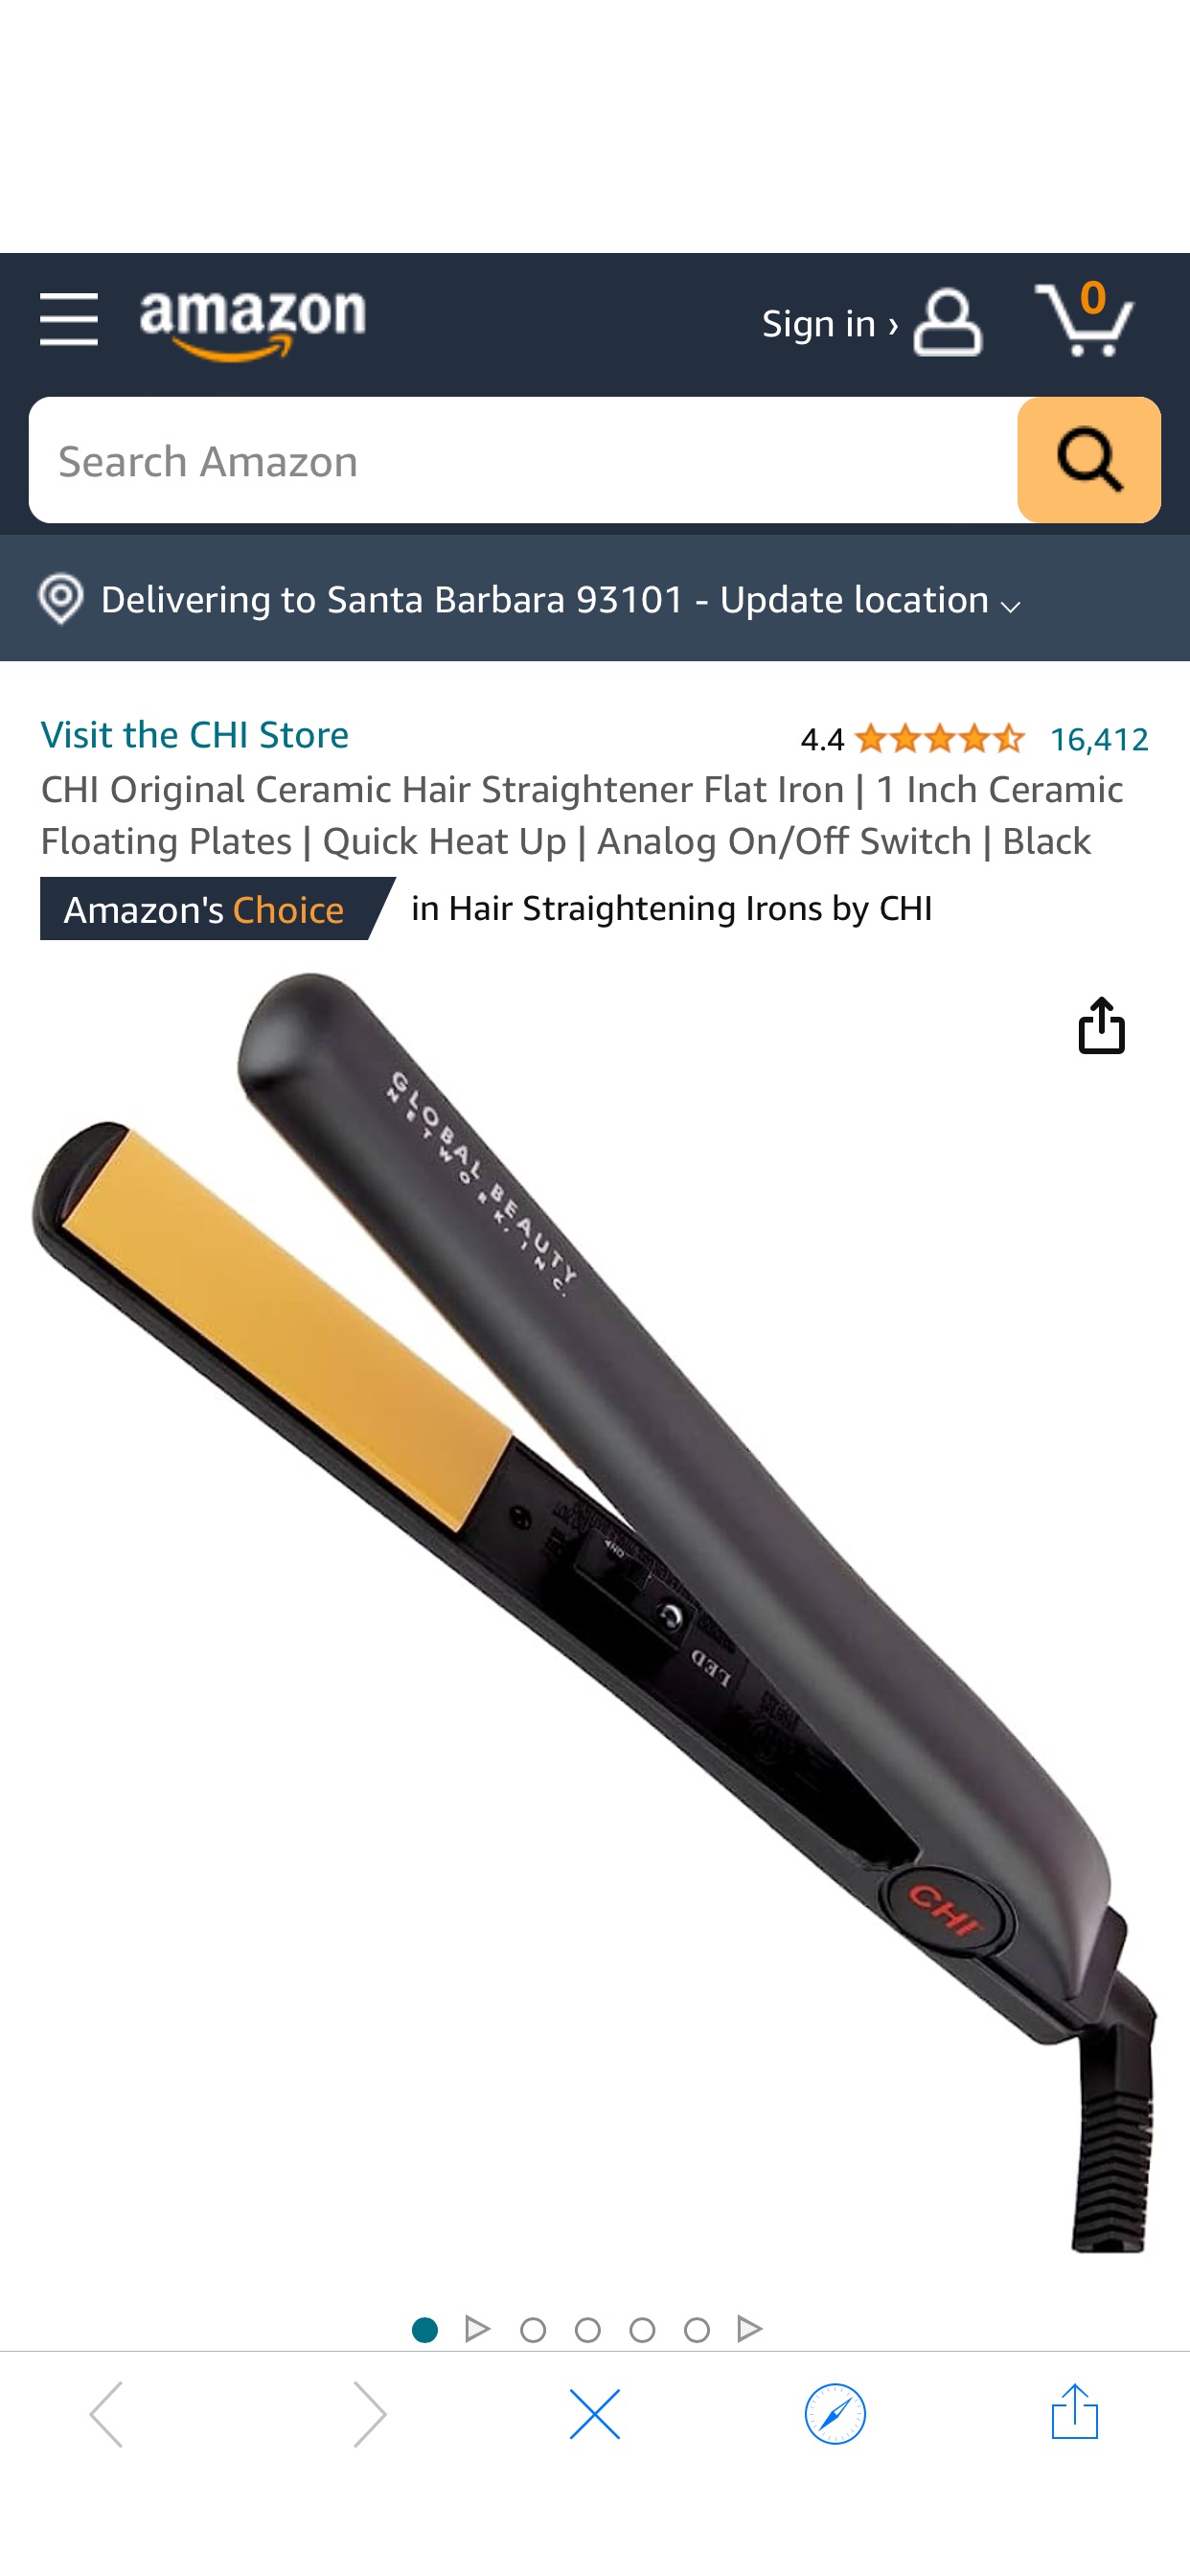 Amazon.com : CHI Original Ceramic Hair Straightener Flat Iron | 1 Inch Ceramic Floating Plates | Quick Heat Up | Analog On/Off Switch | Black : Flattening Irons : Beauty & Personal Care